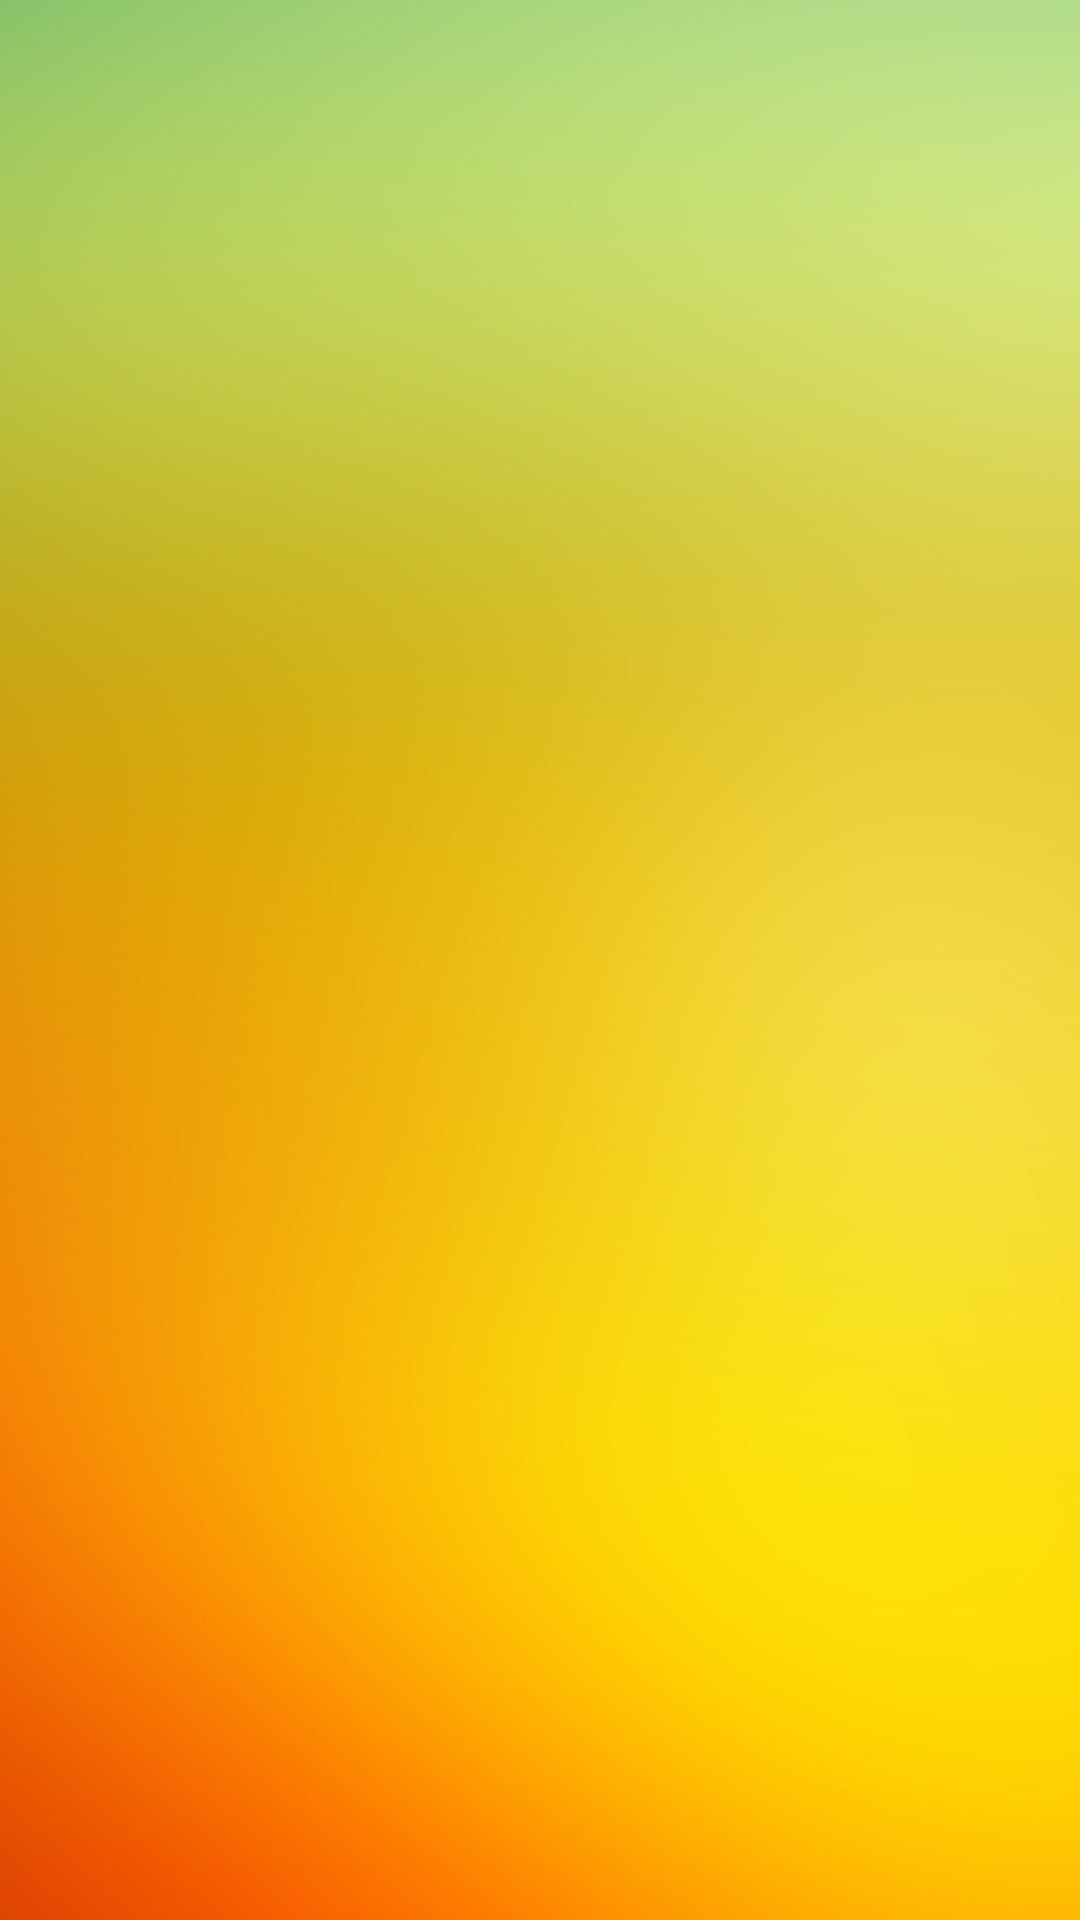 Modelo rojo verde amarillo | wallpaper.sc Android